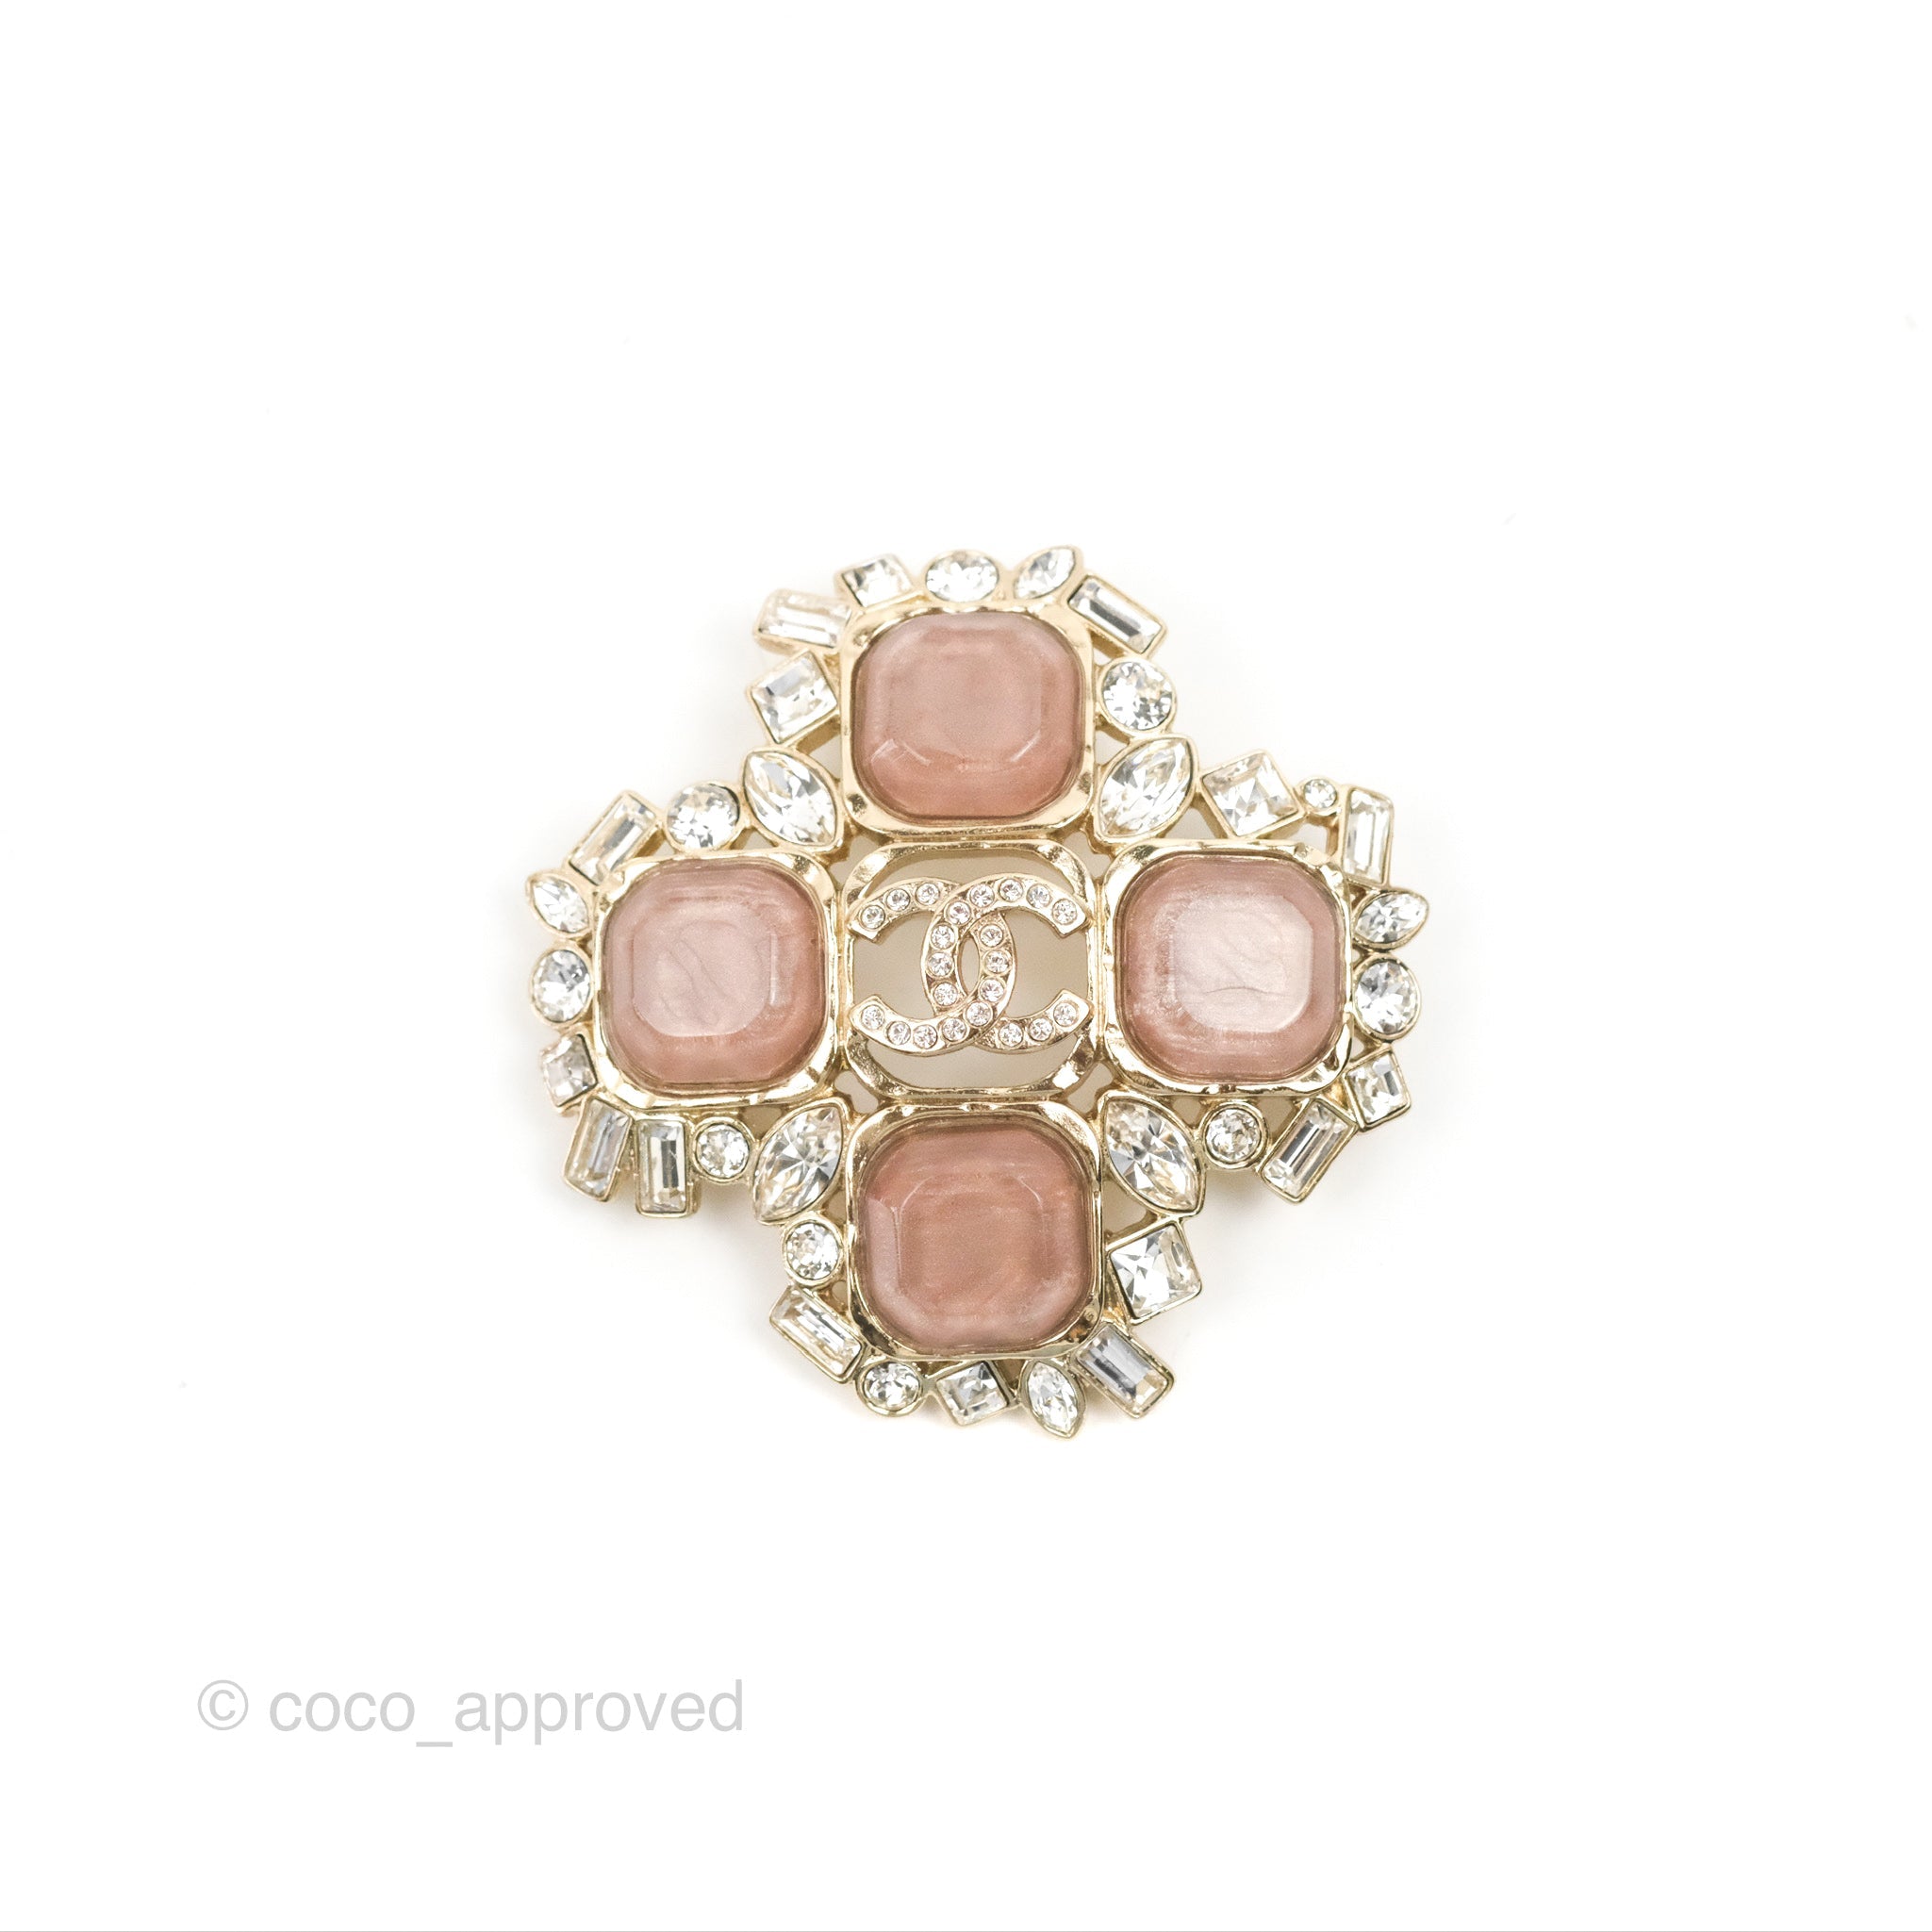 Vintage Chanel Pink Glass, Rhinestone Jewelry Suite.